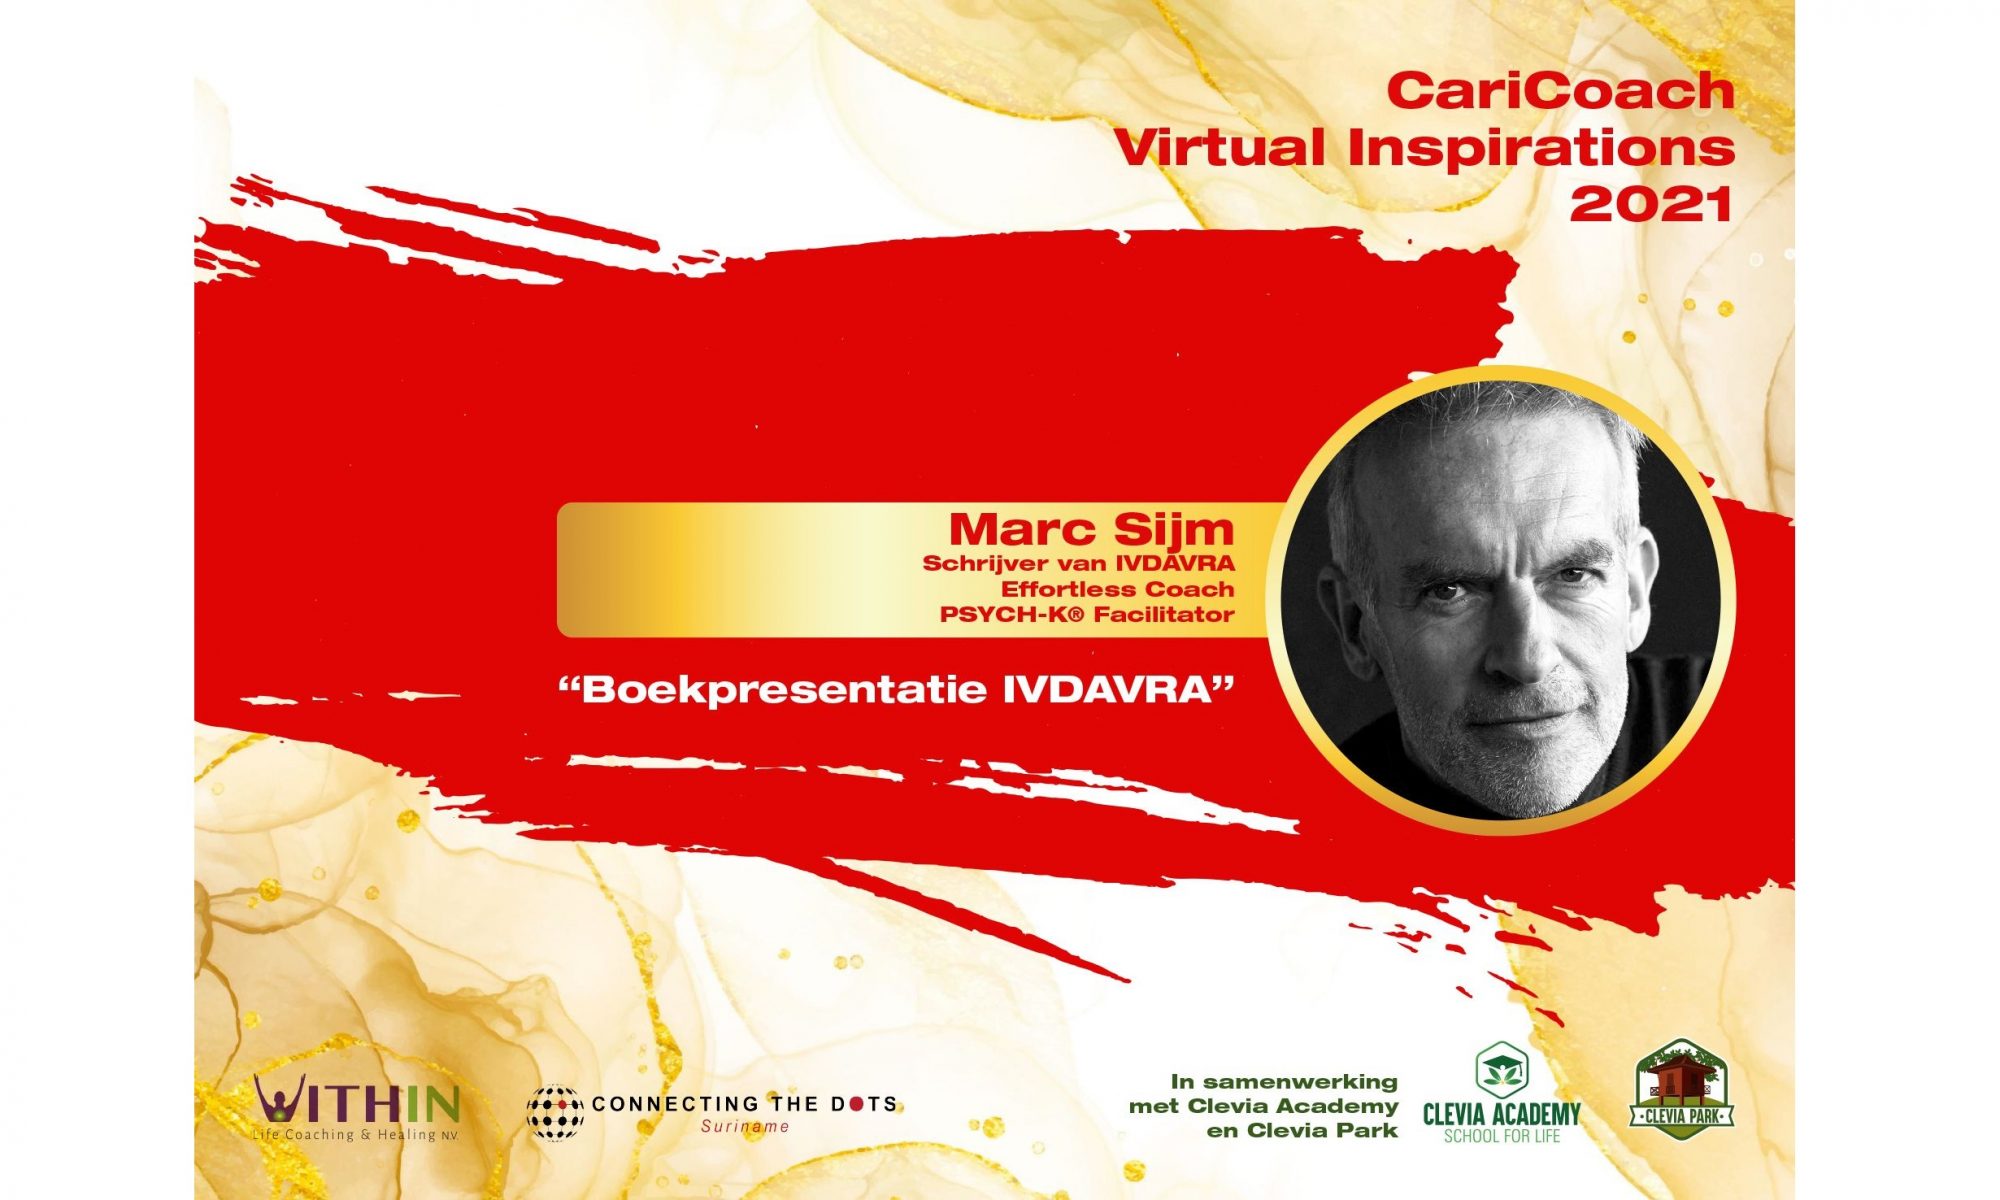 MarcSijm-IVDAVRA-Boekpresentatie-CaricoachInspirations-2021